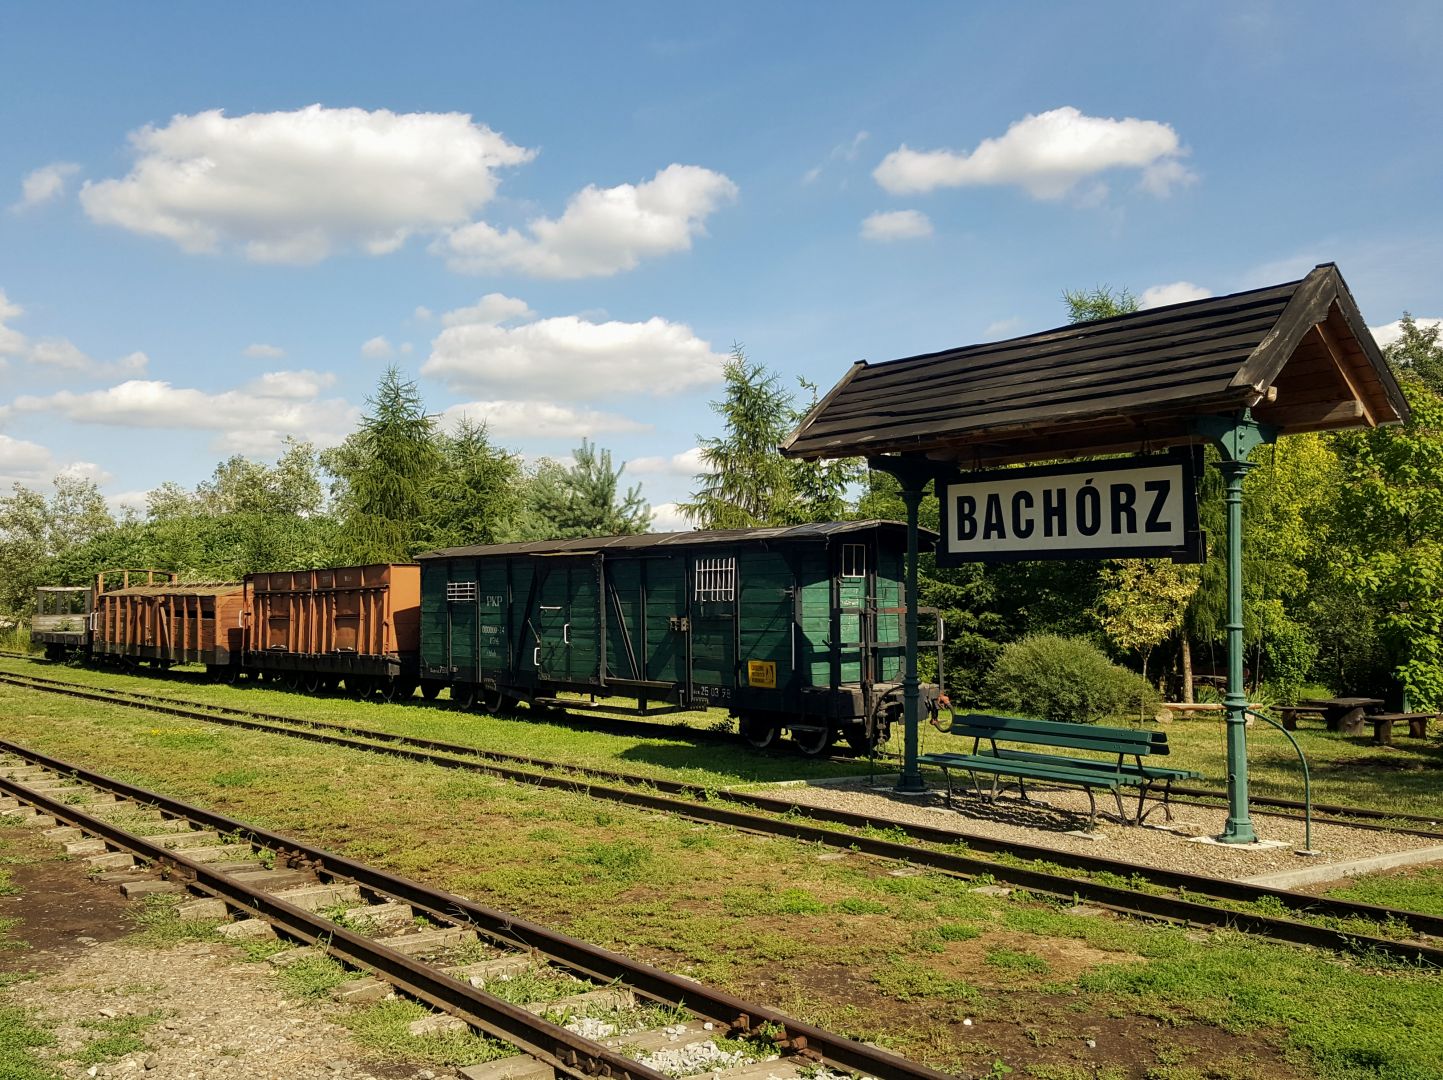 Bachórz station of the narrow gauge railway